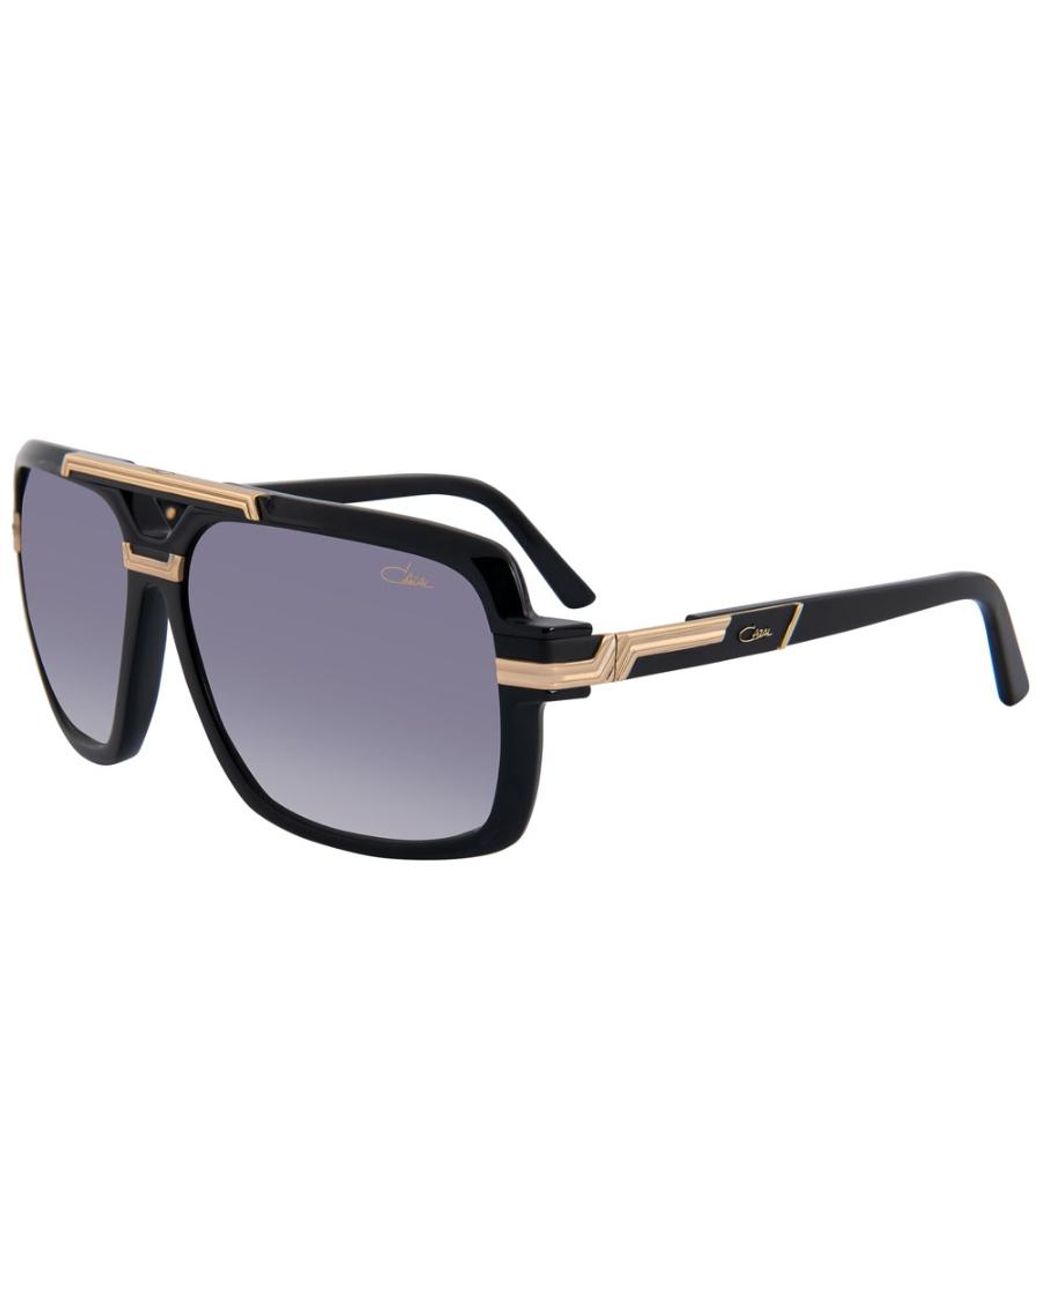 Cazal Grey Navigator Sunglasses 8042 001 61 in Black | Lyst